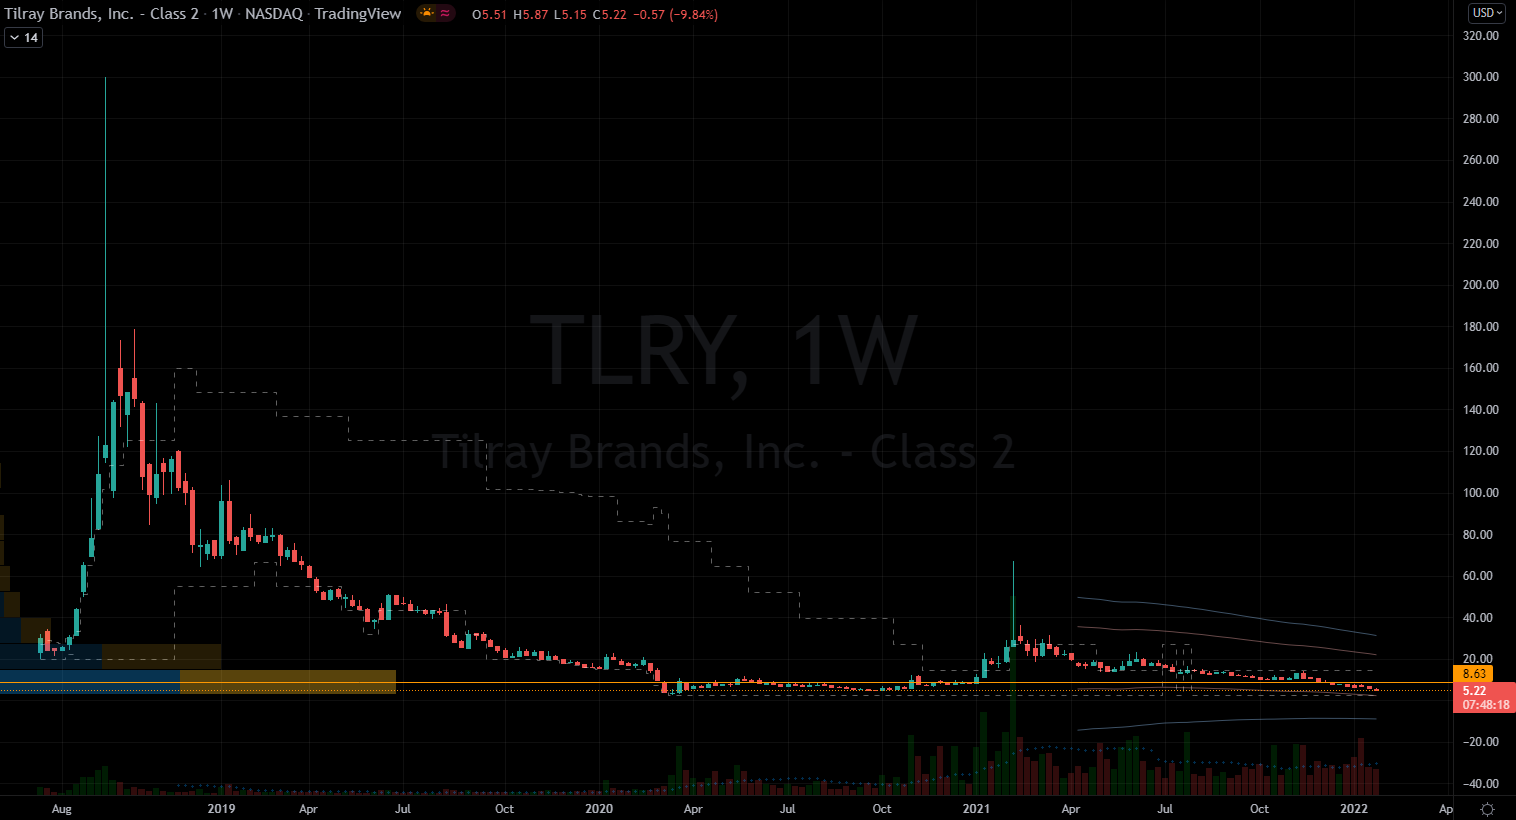 Tilray (TLRY) Stock Chart Showing Investor Devastation